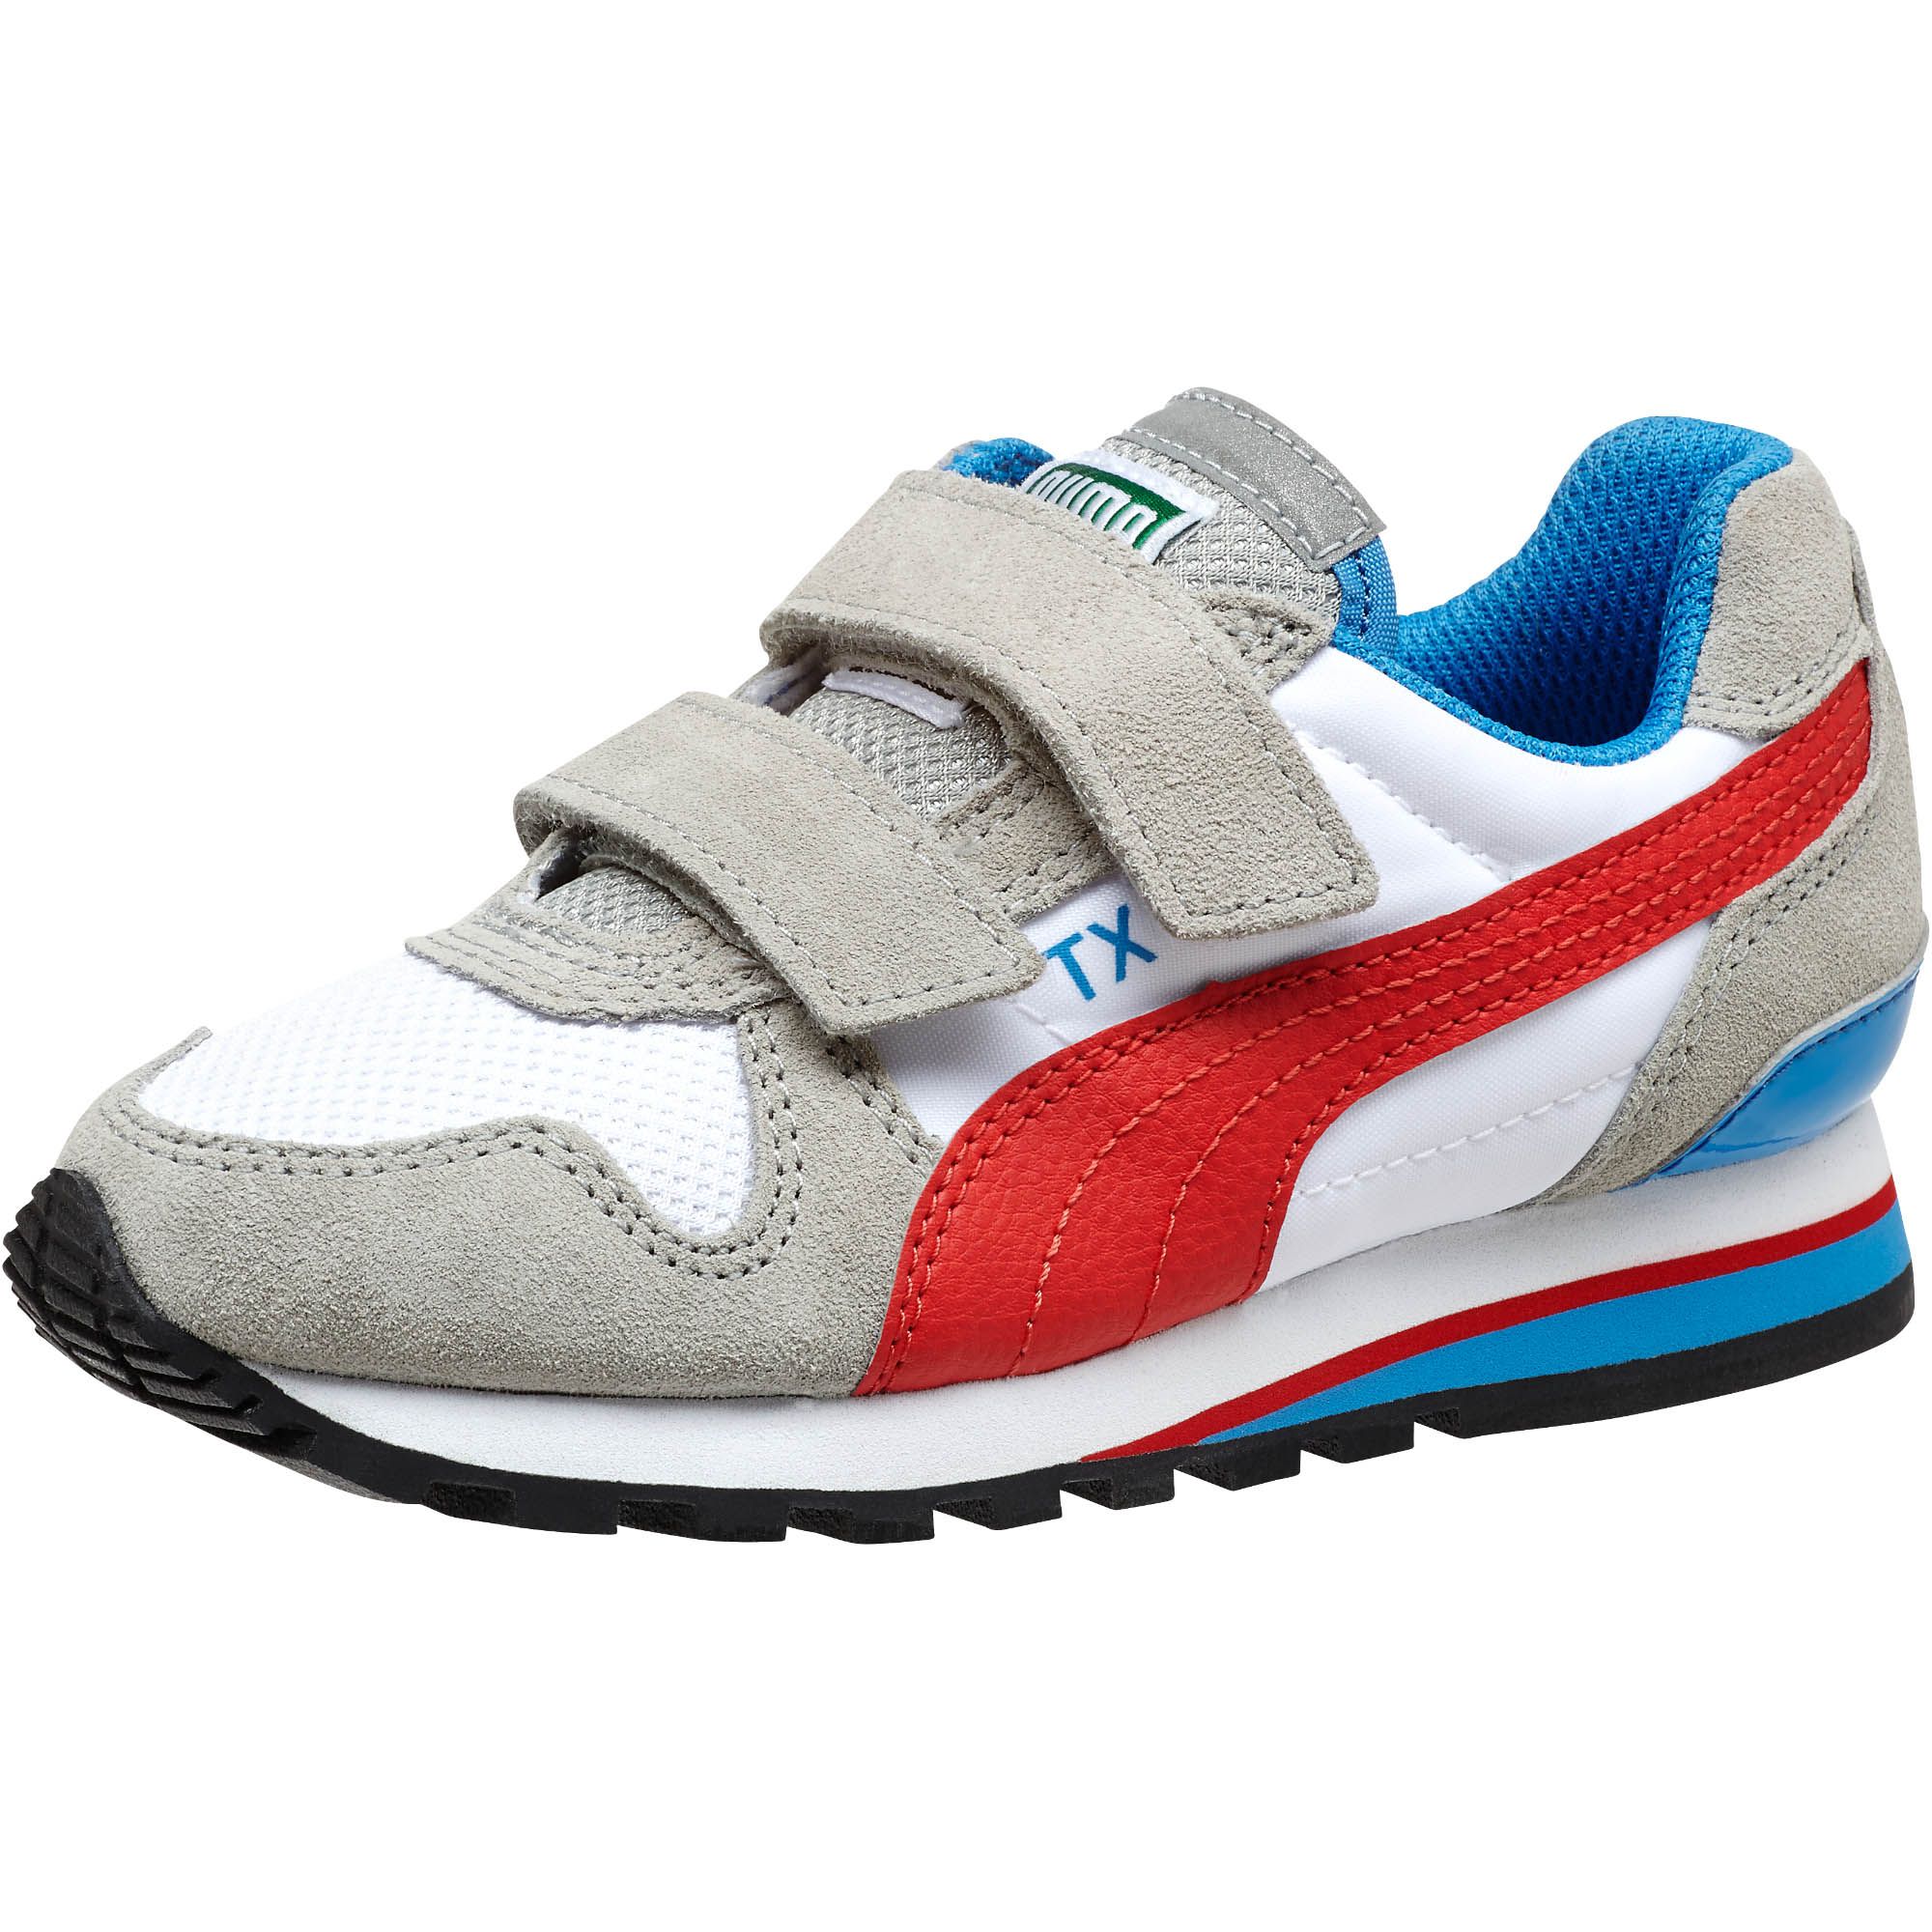 PUMA® Boys' Shoes - Ferrari, Sneakers, Running, Golf & More